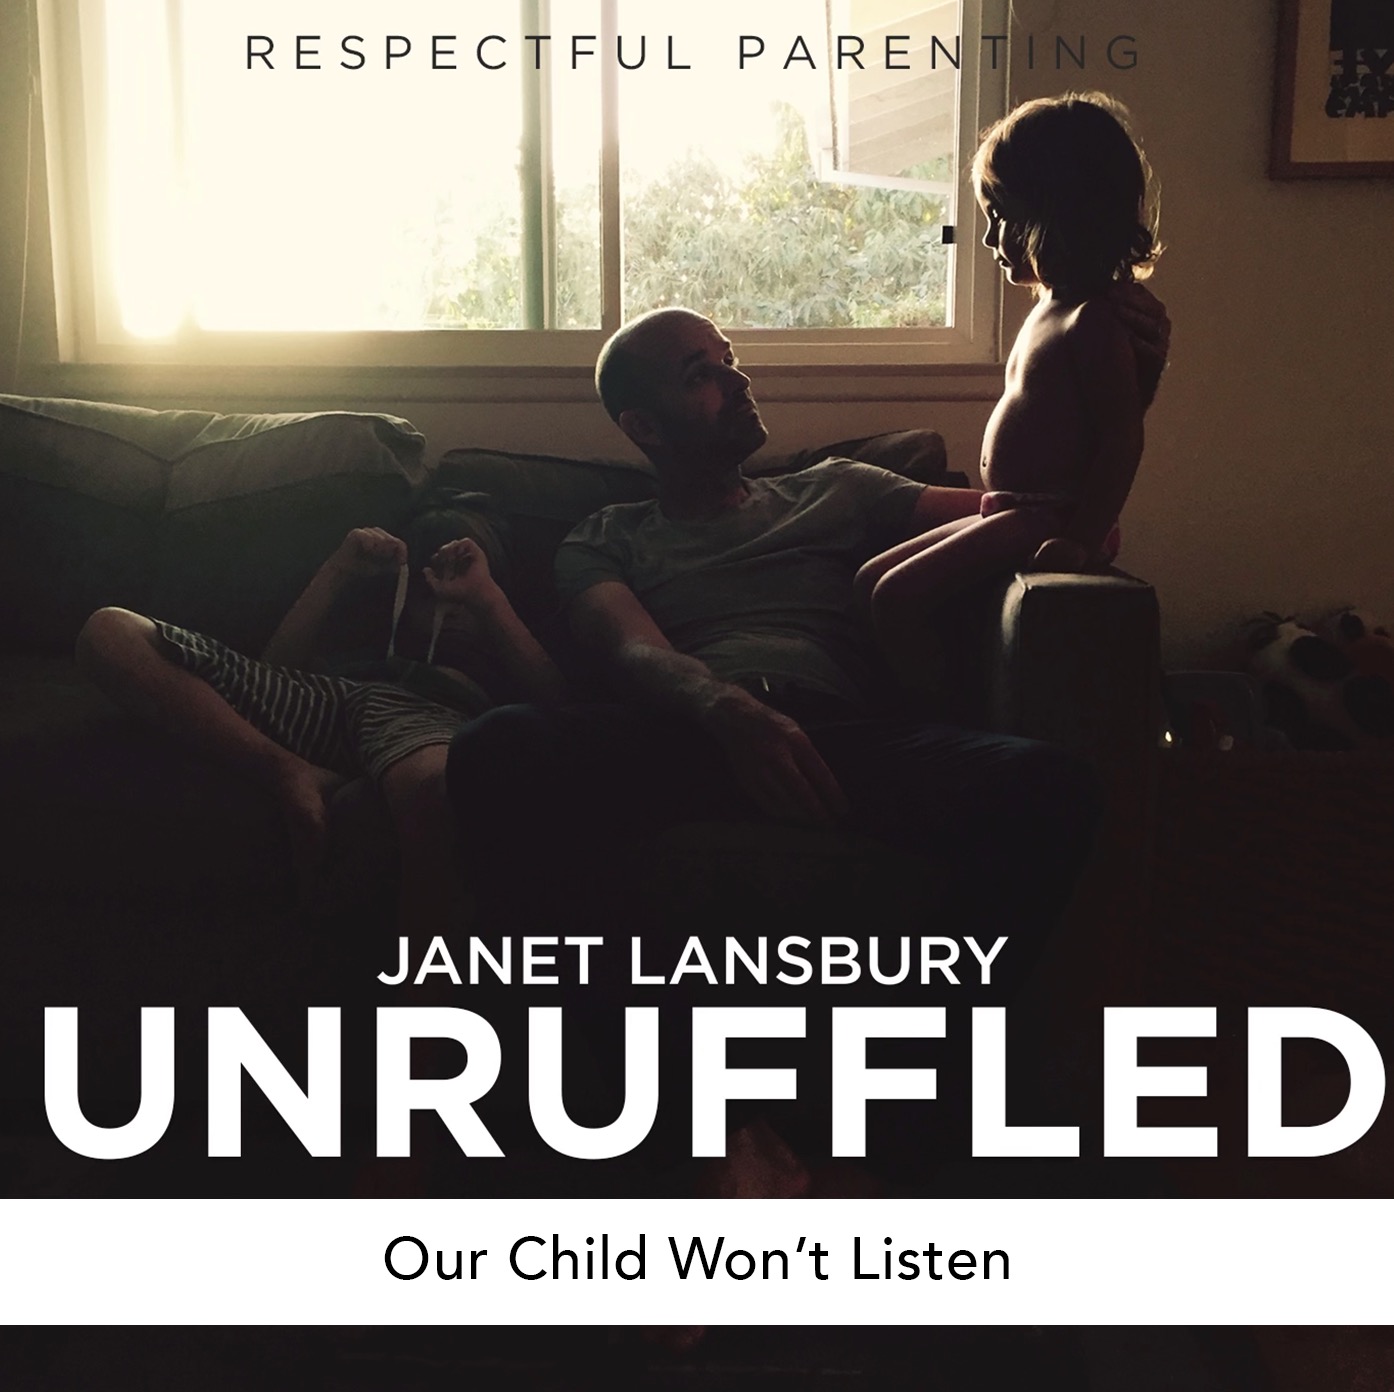 Our Child Won't Listen - Janet Lansbury